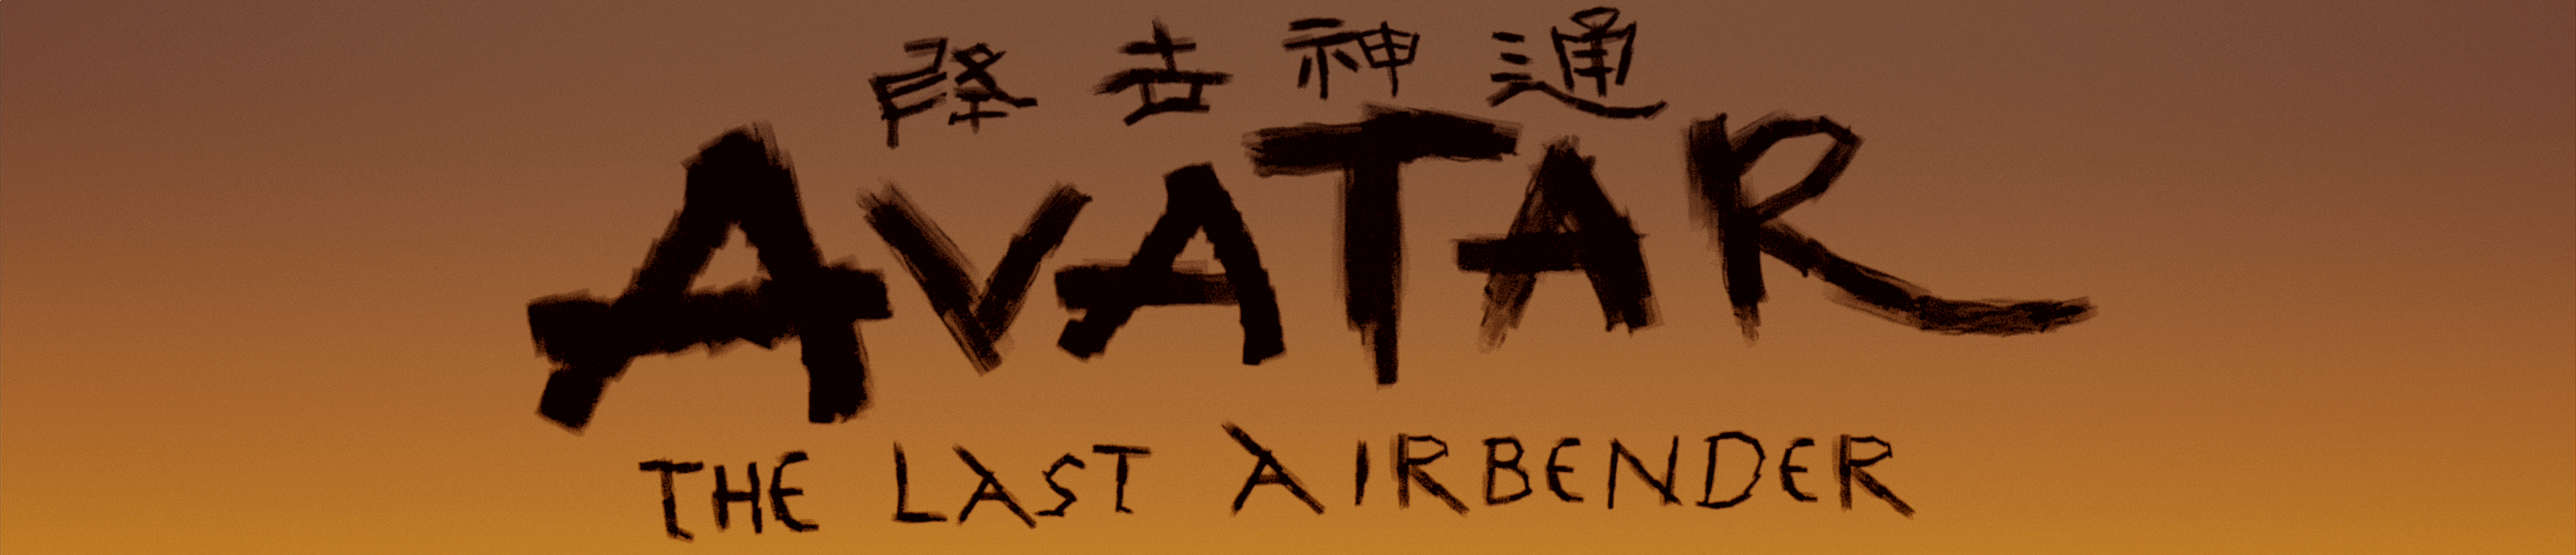 Banner Avatar The Last Airbender